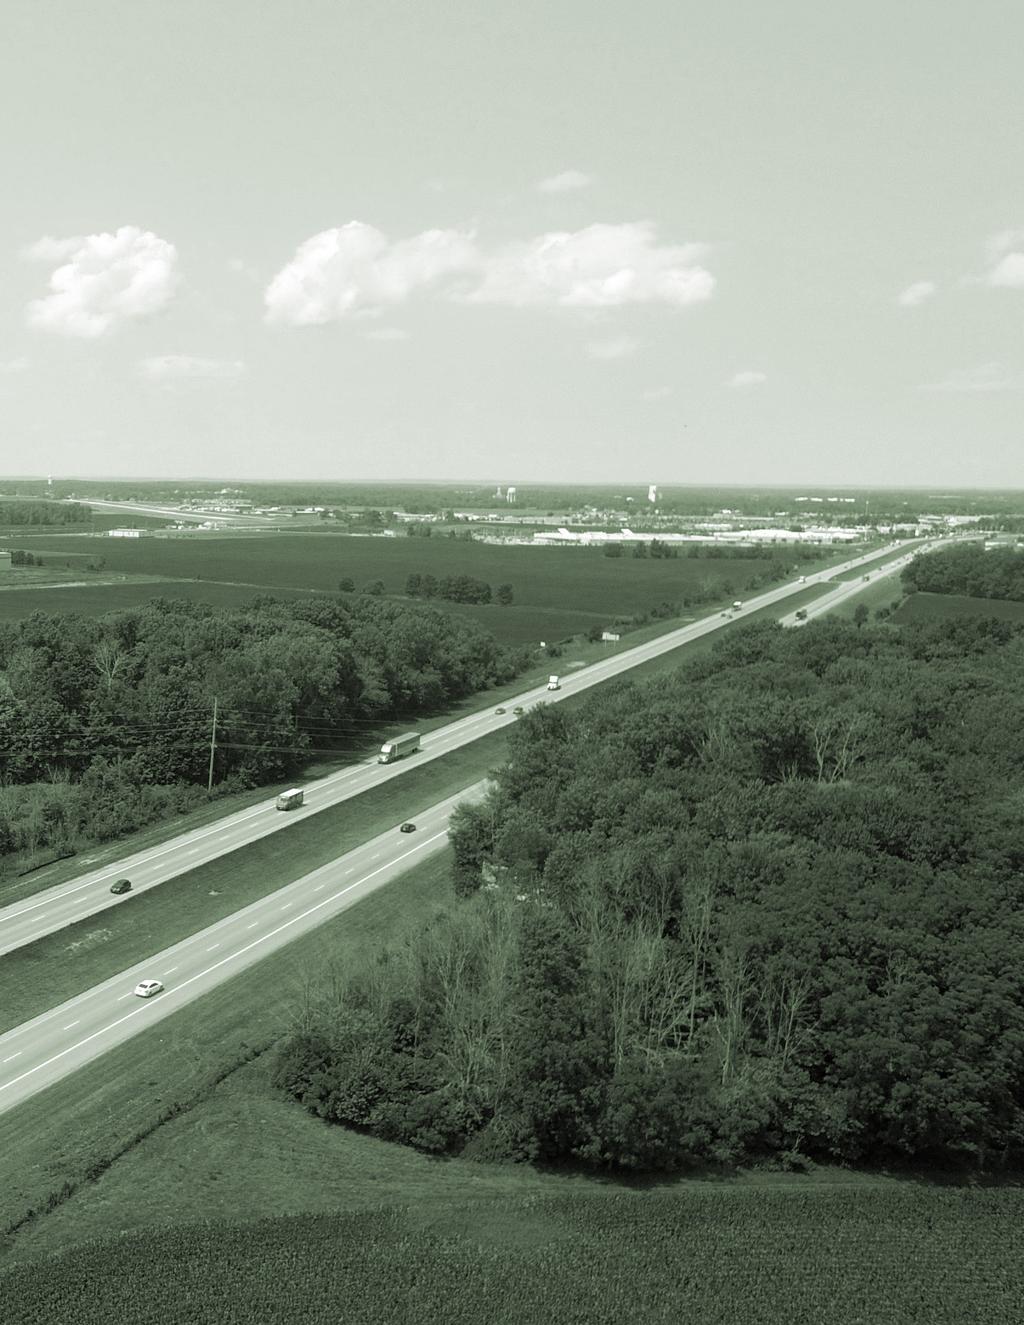 Ohio s 33 Smart Mobility Project 35-mile Smart Corridor 432 strand redundant fiber network